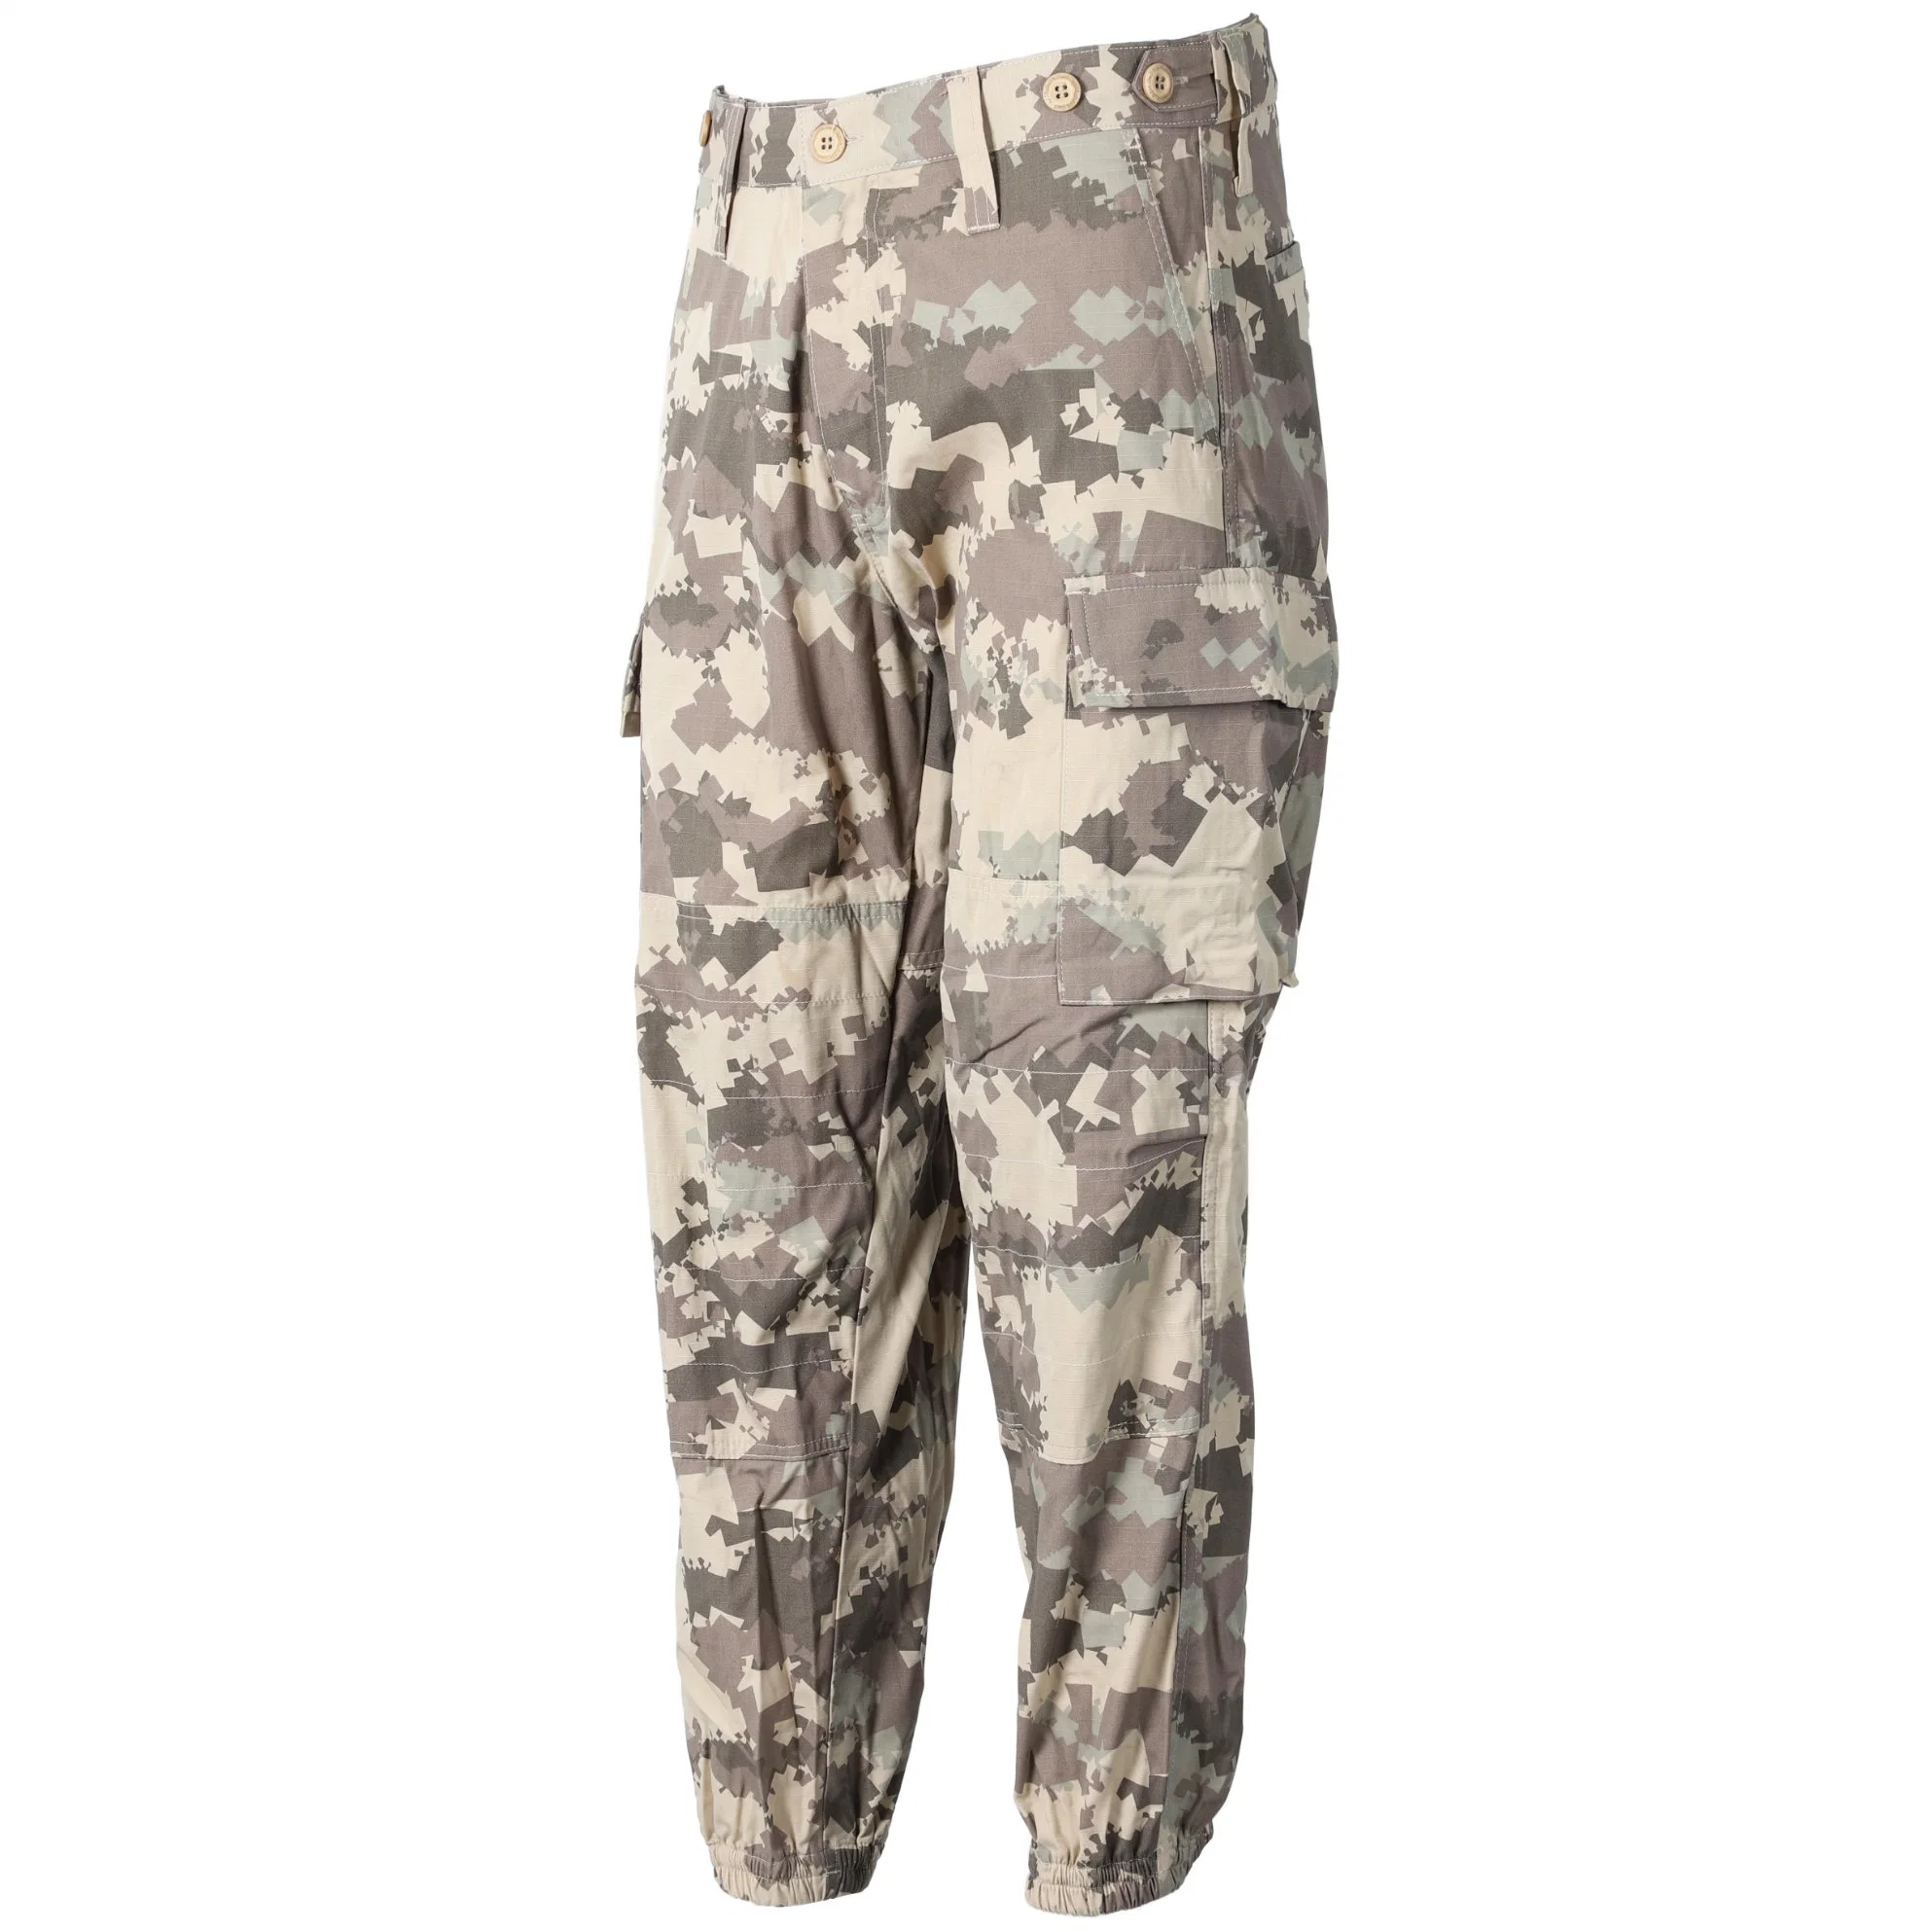 Herren Military Style Tactical Uniform Poly / Baumwolle Rip-Stop Bdu Cargo Hose